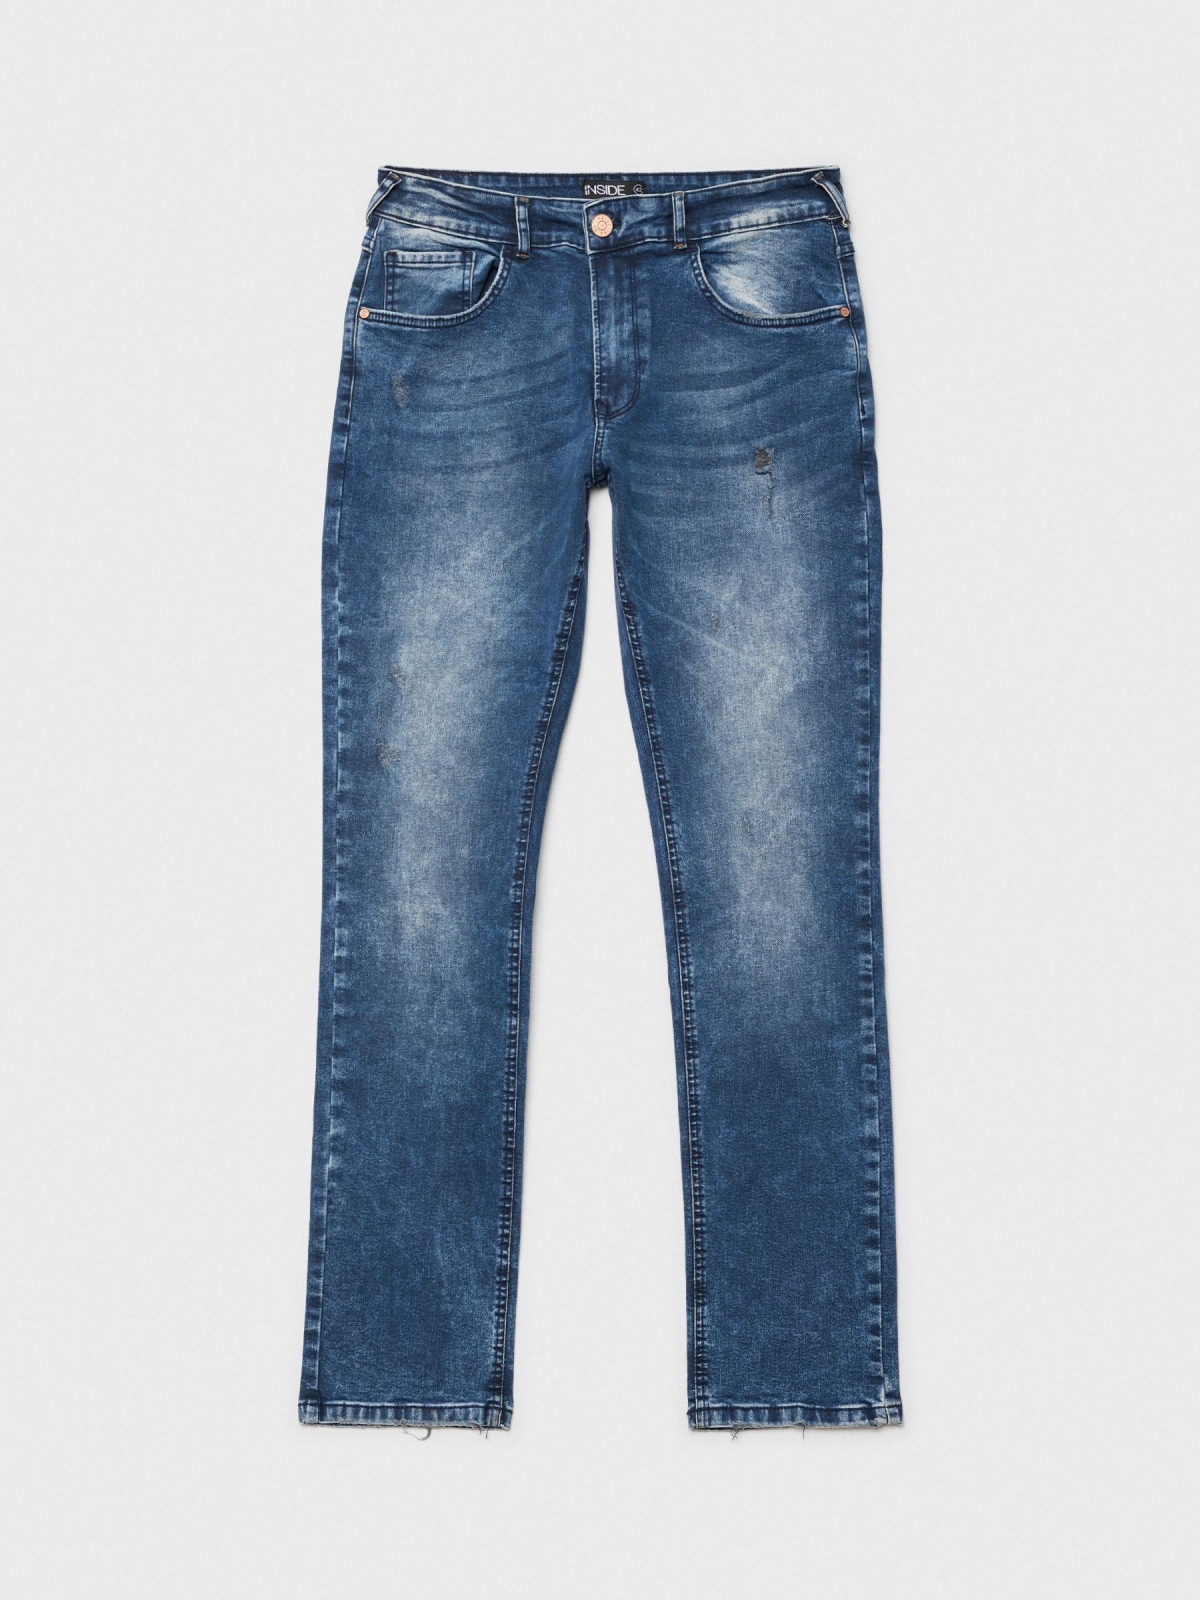  Distressed regular jeans navy